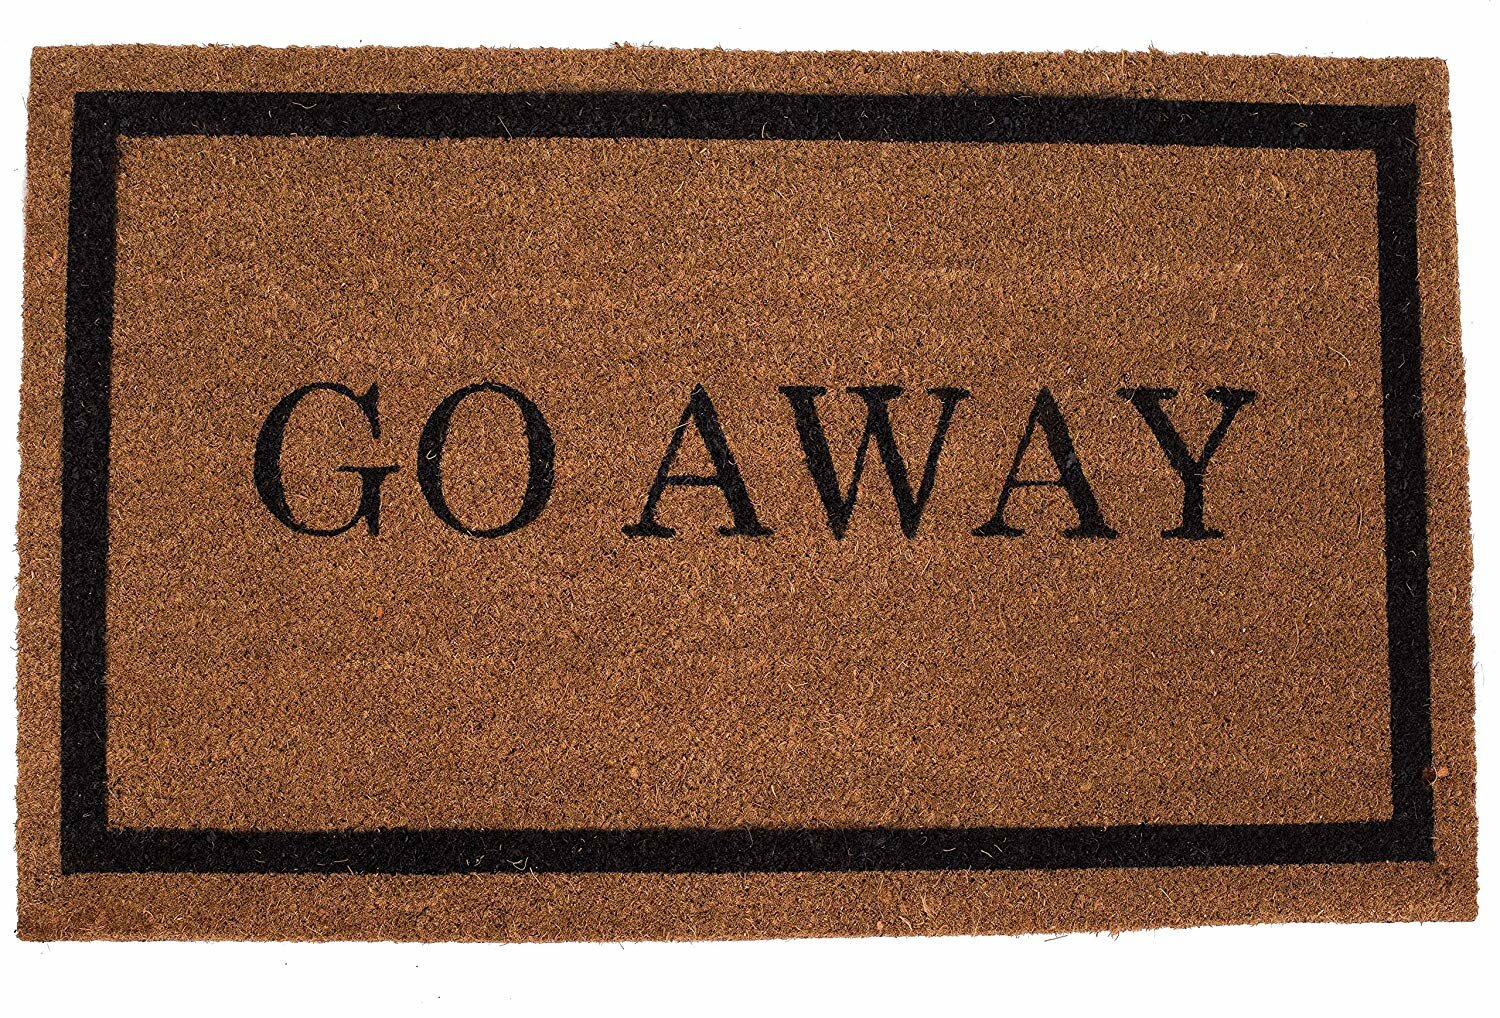 Make go away. Коврик добро пожаловать. Картинка no mat. Woman Doormat. Go away.